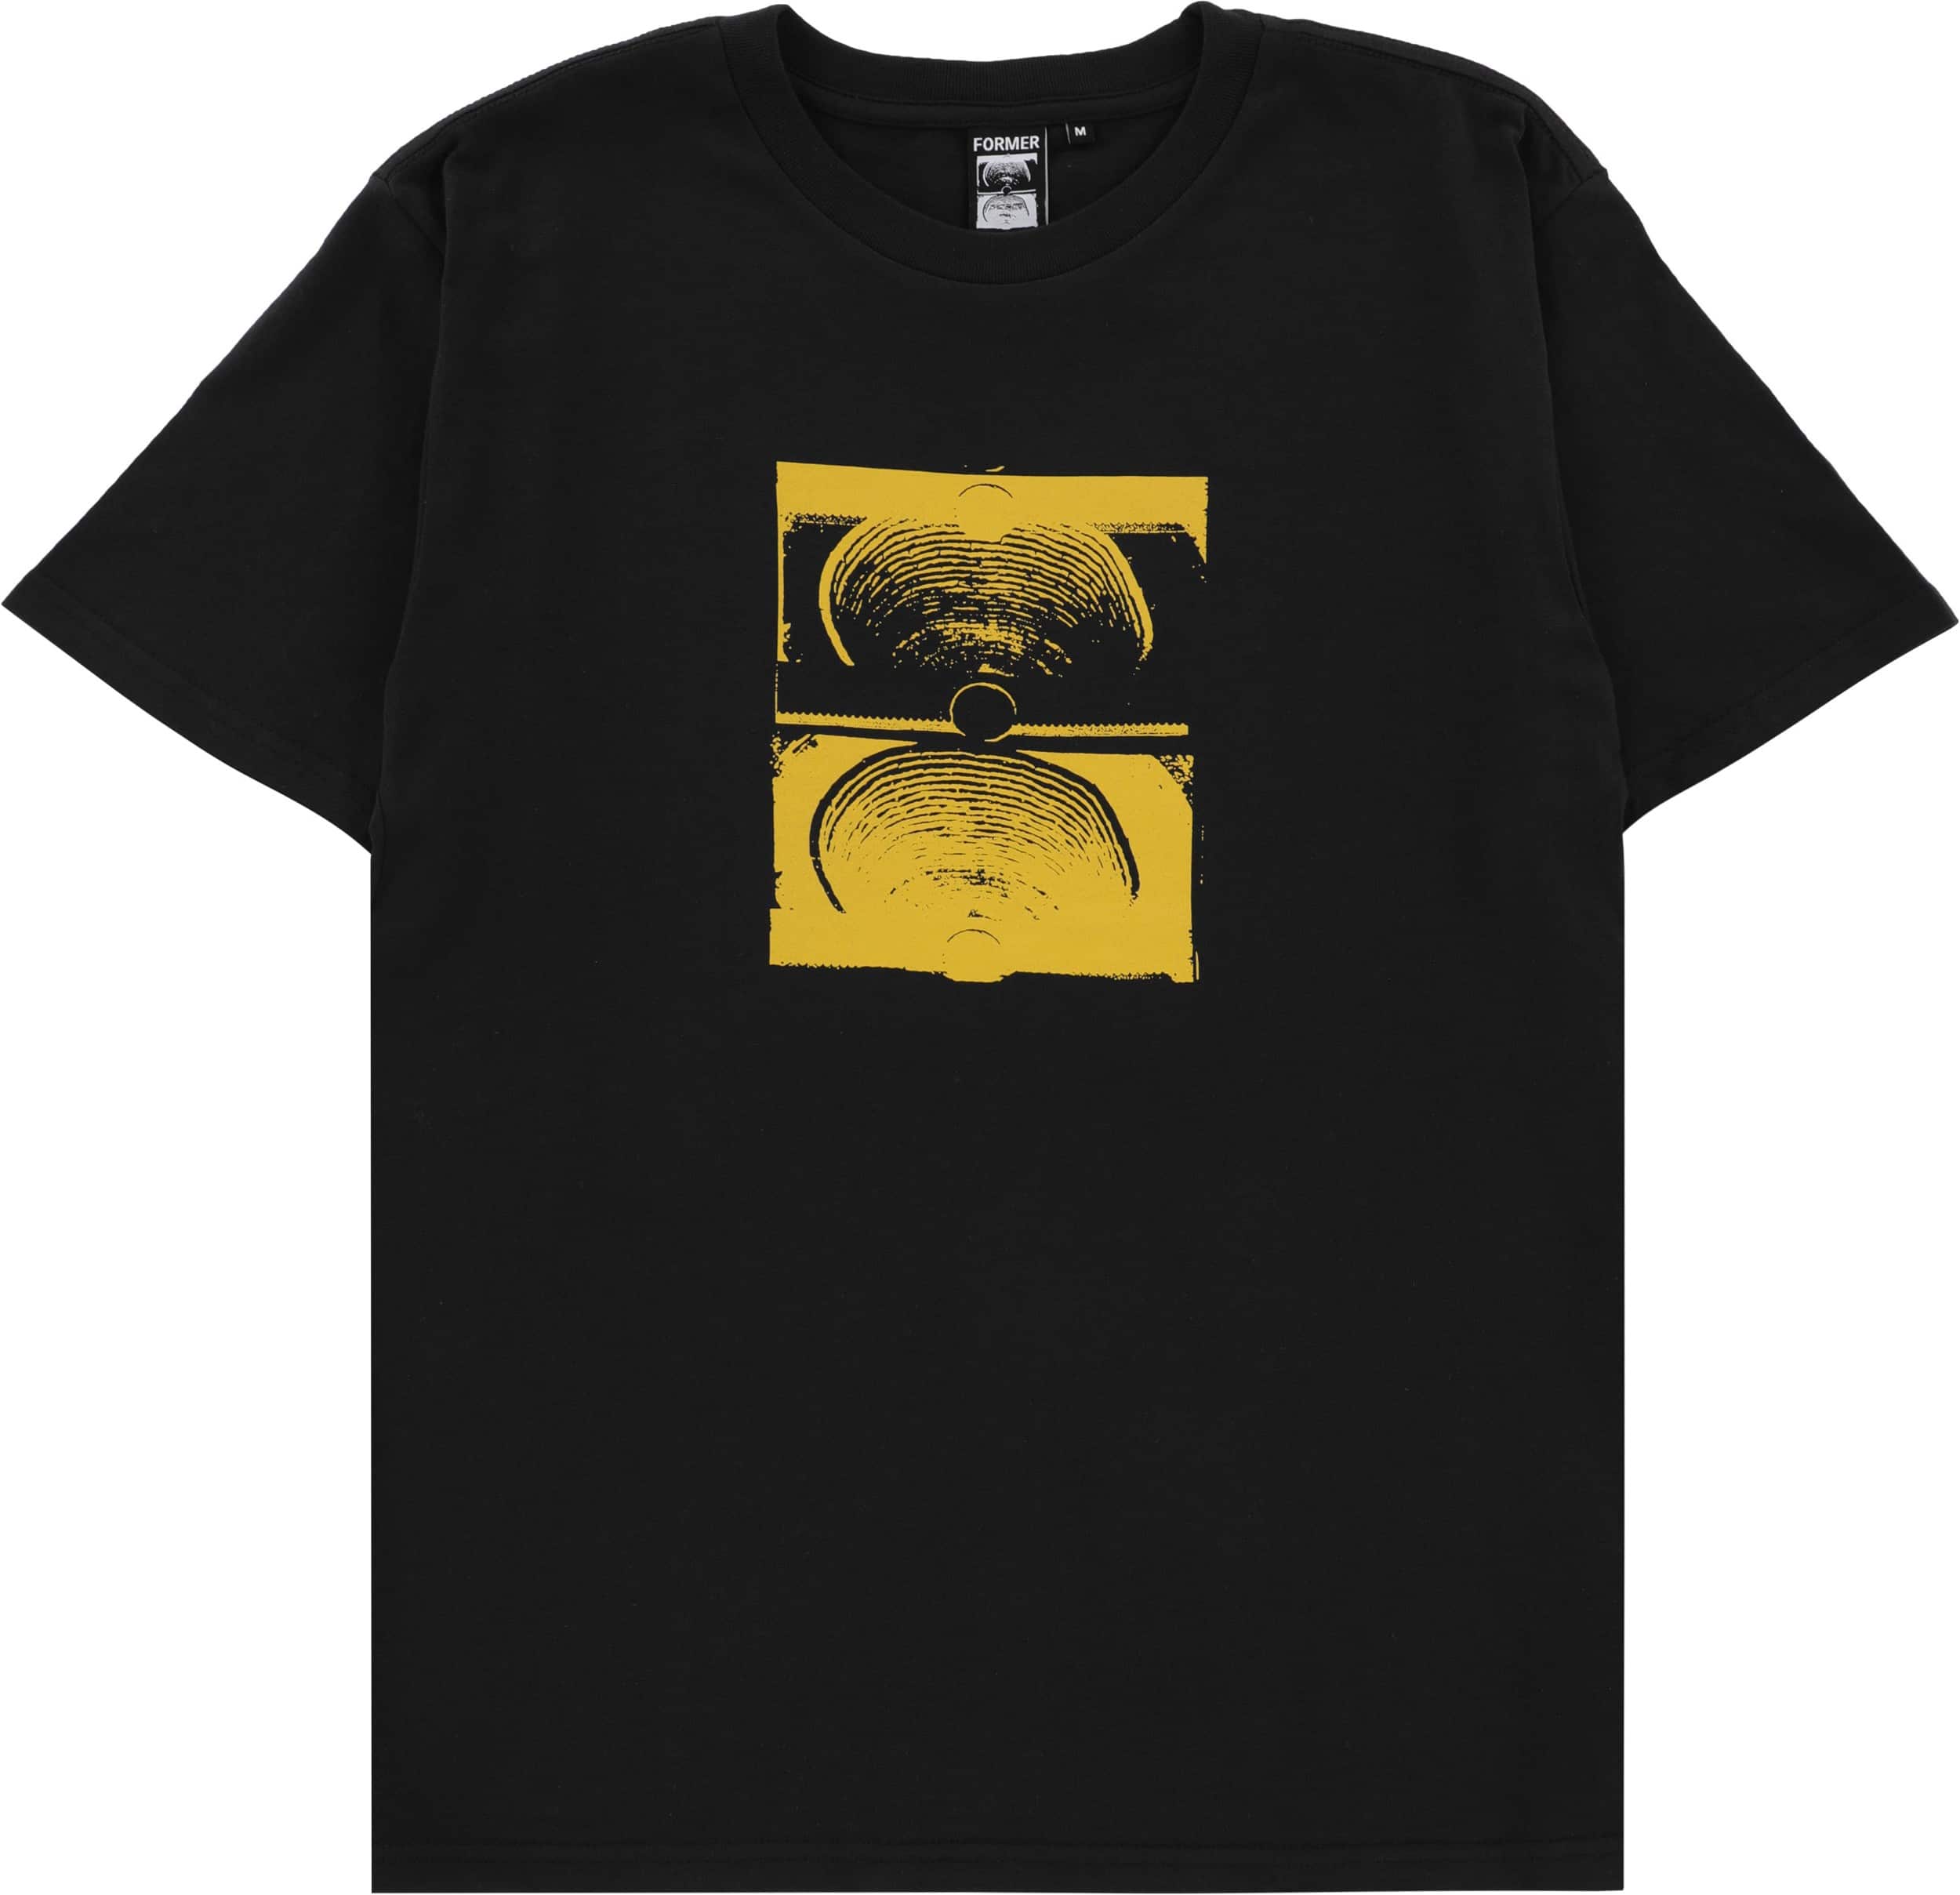 Former crux t-shirt // black